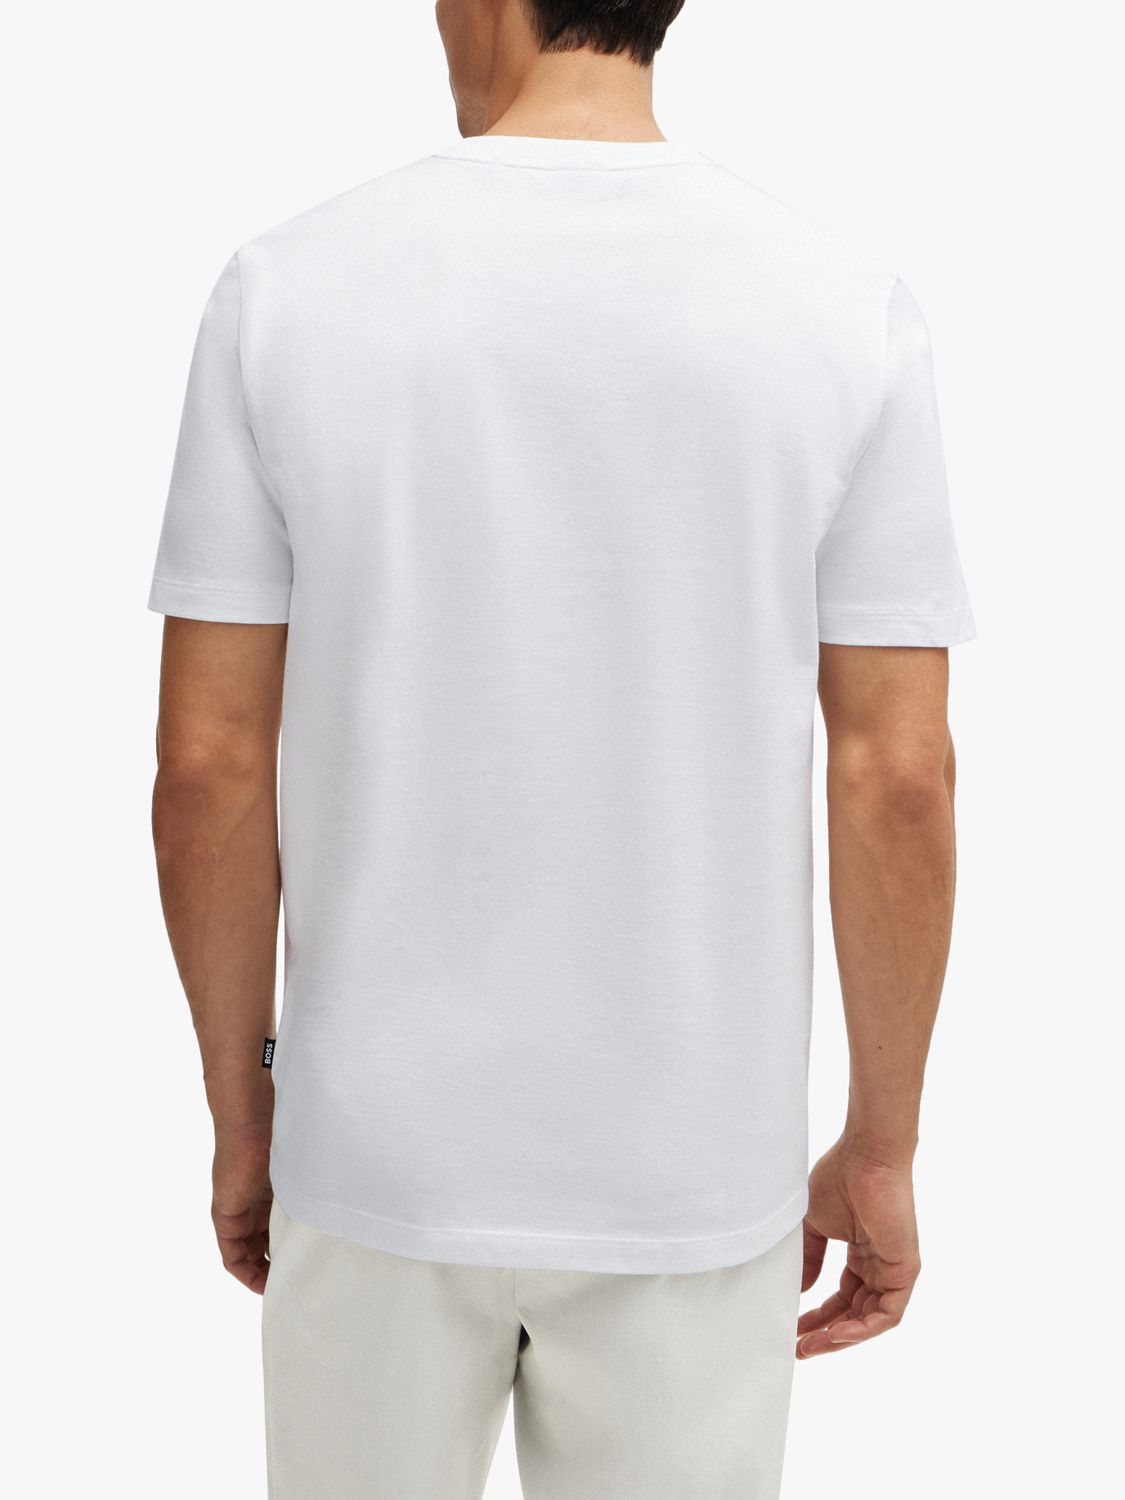 BOSS Tiburt 511 Short Sleeve T-Shirt, White/Multi, L